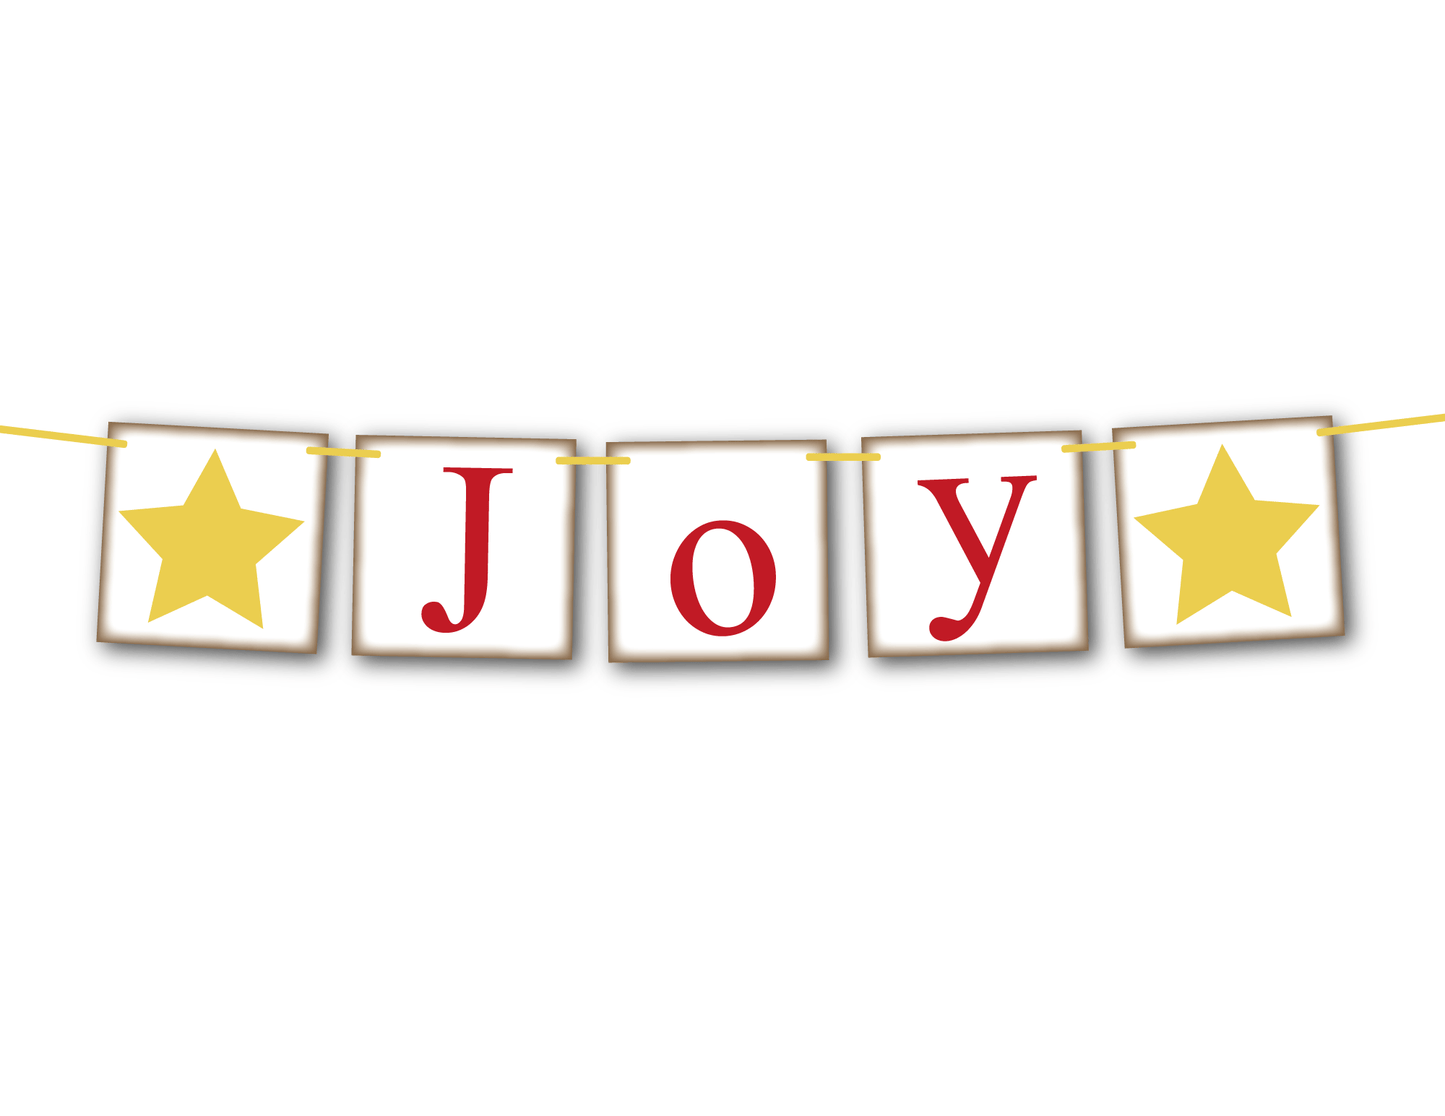 printable joy banner - DIY Christmas decor - Celebrating Together